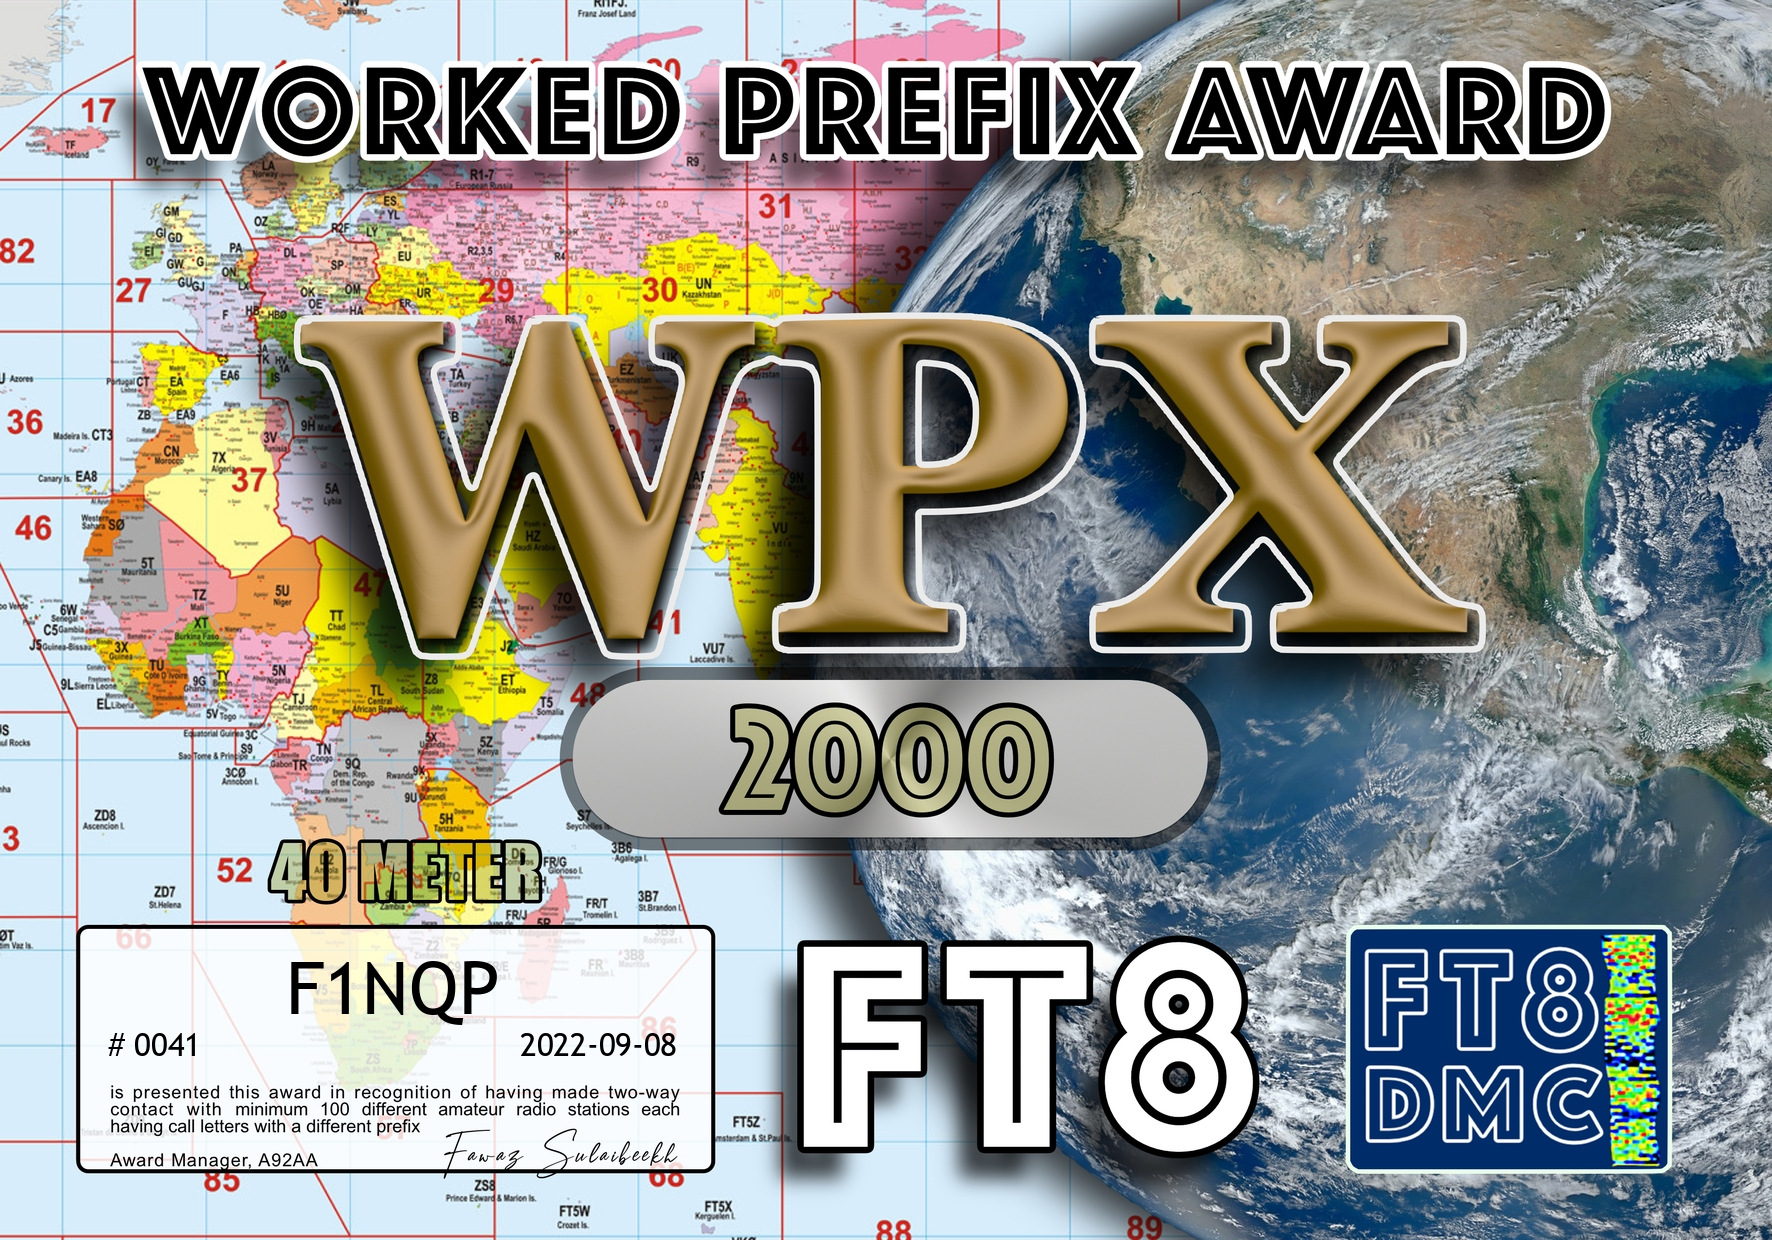 F1NQP-WPX40-2000_FT8DMC.jpg